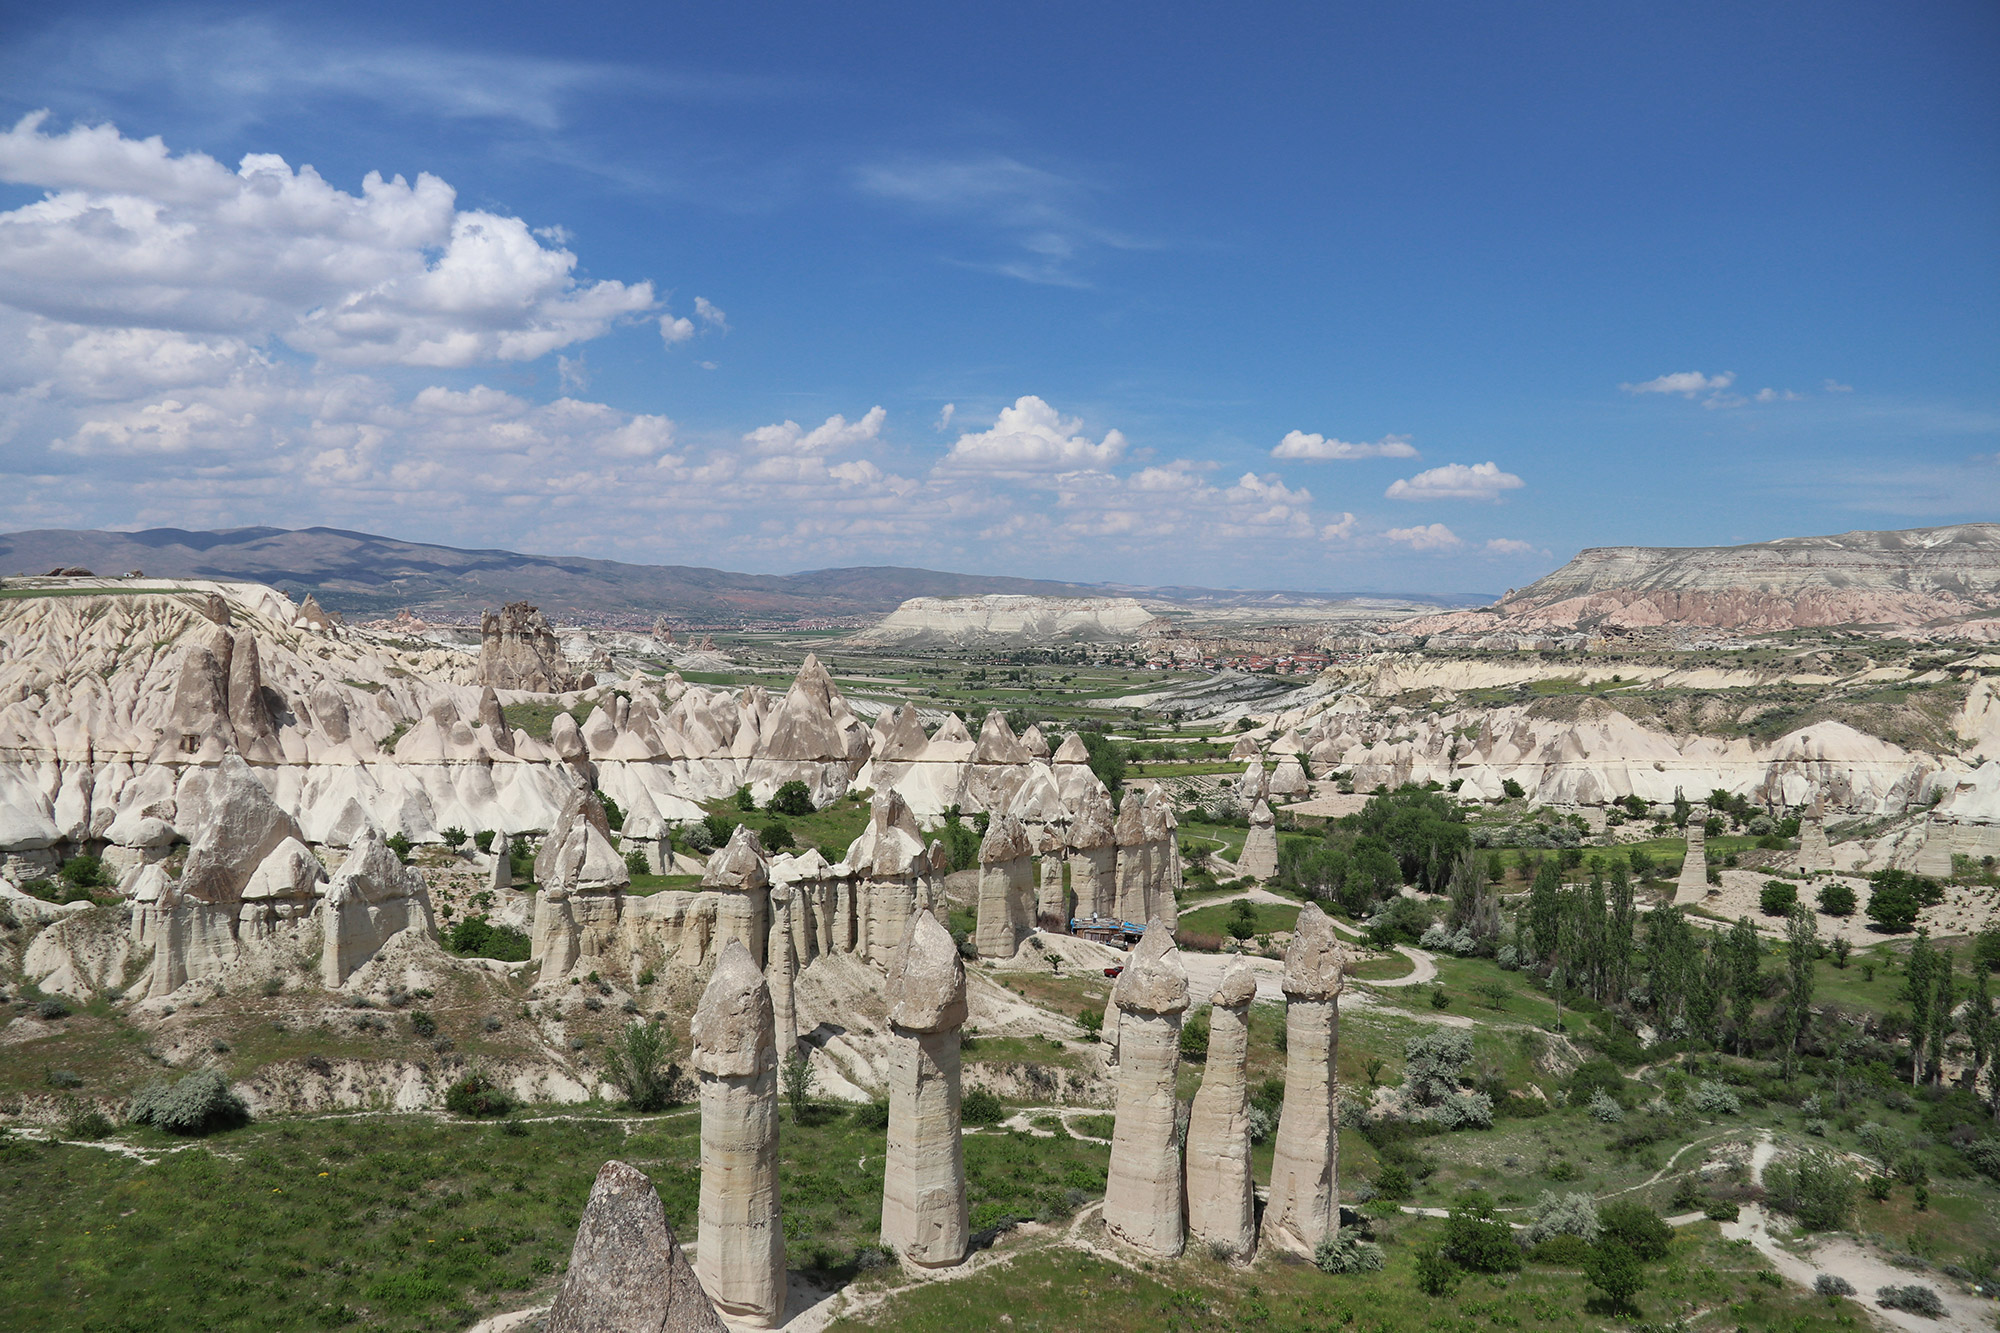 Turkije reisverslag: Terug in Cappadocië - Love Valley